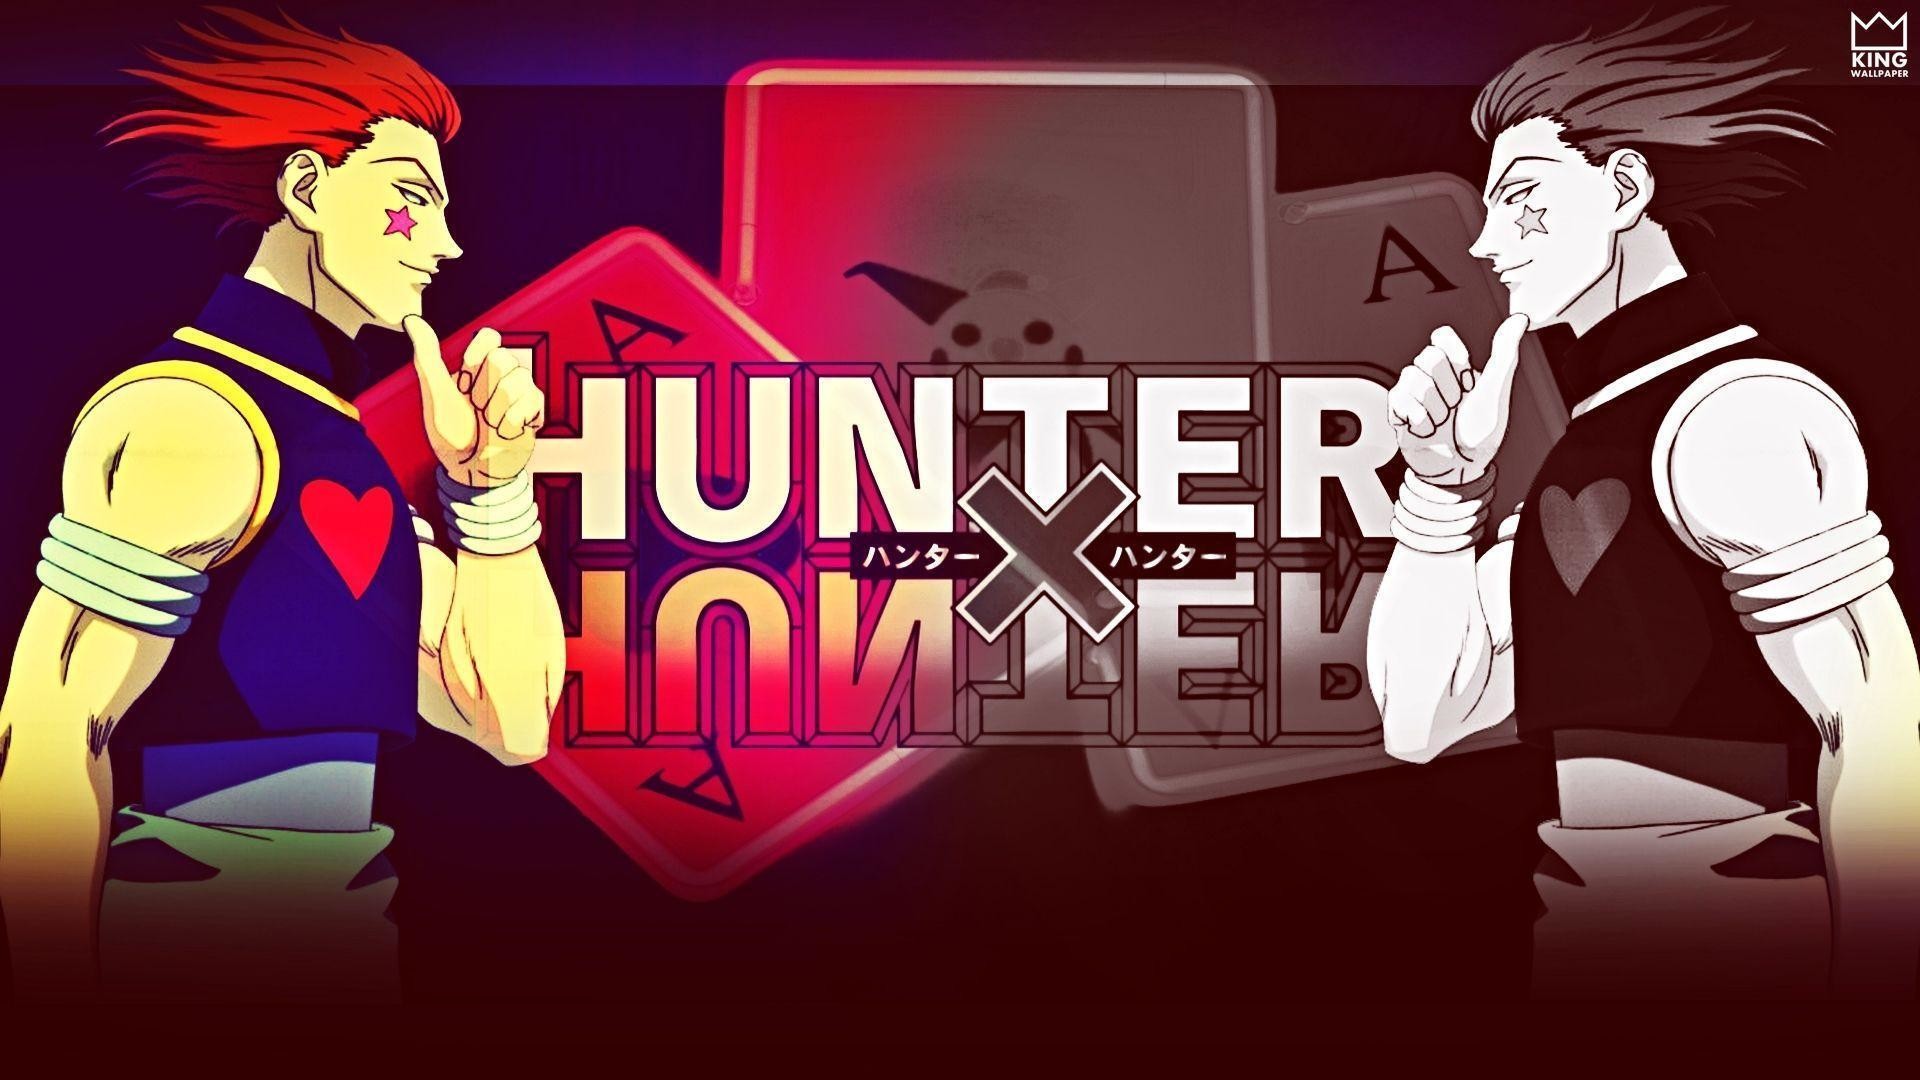 Hunter x hunter hisoka wallpaper â wallpapersafari